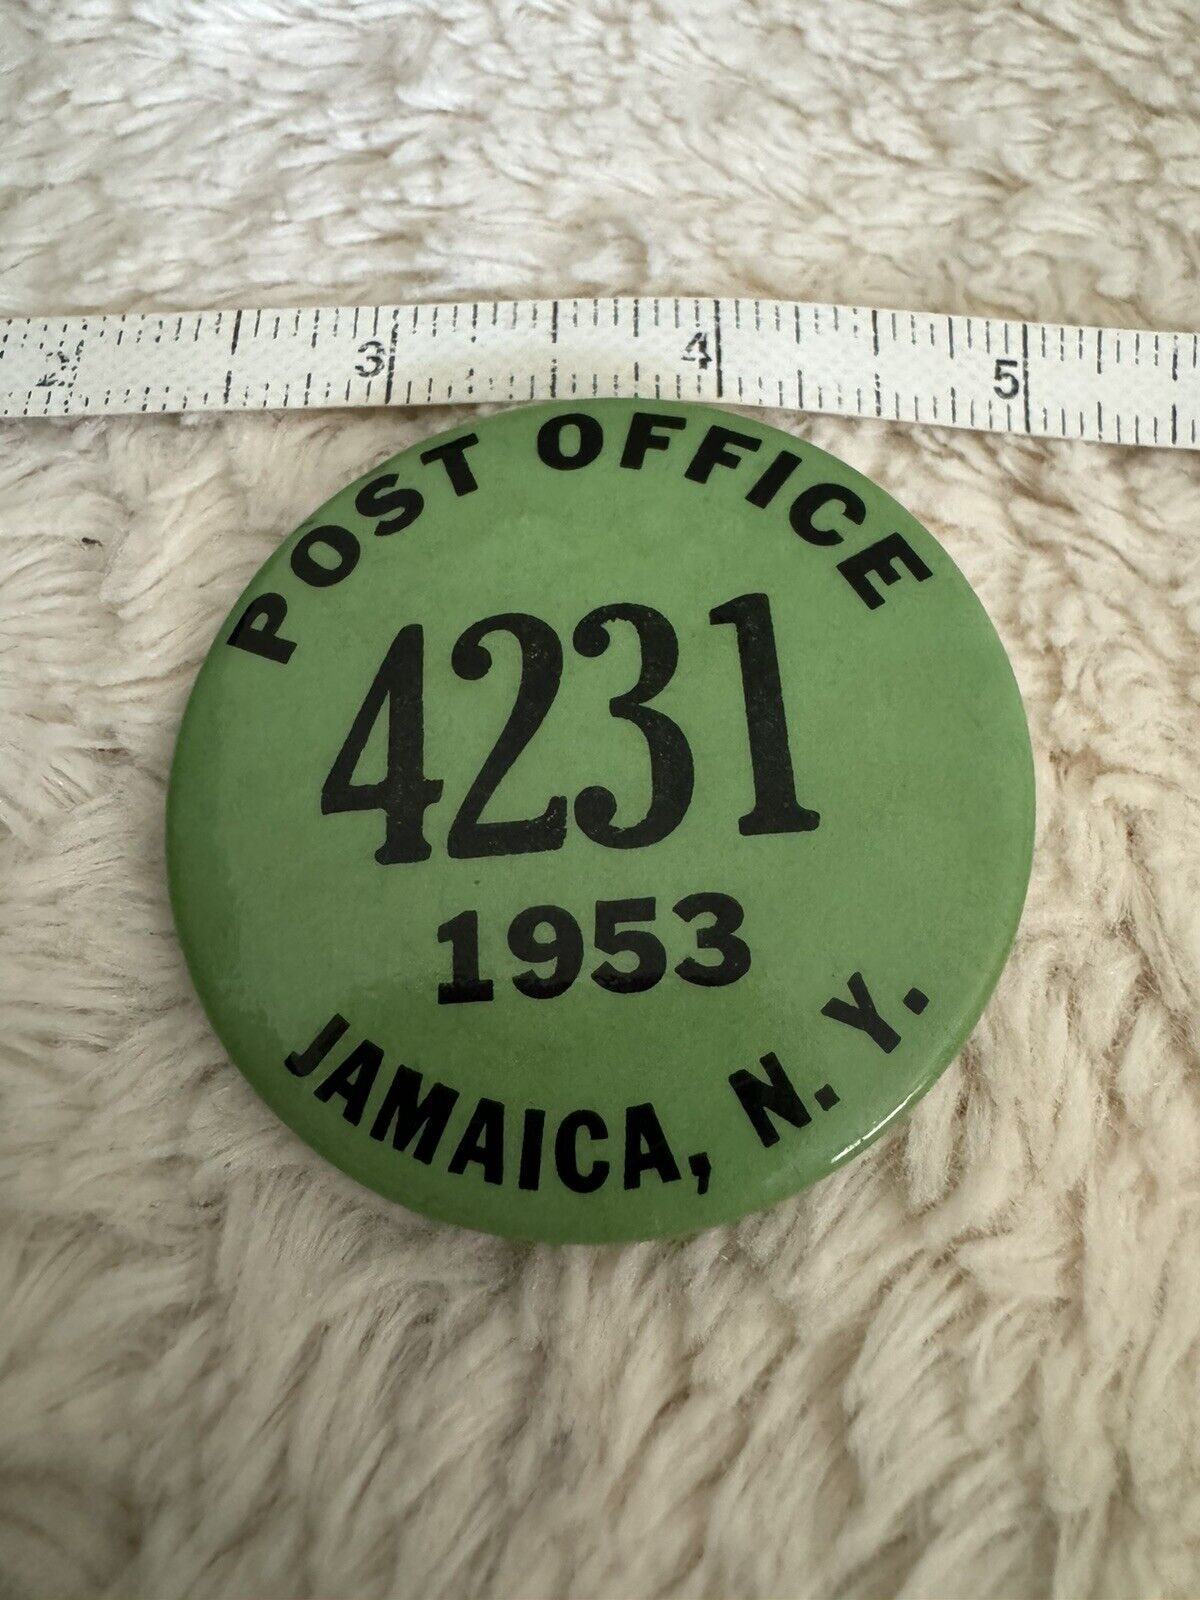 Vintage USPS Post Office U.S. Mail Antique Obsolete Badge Pin